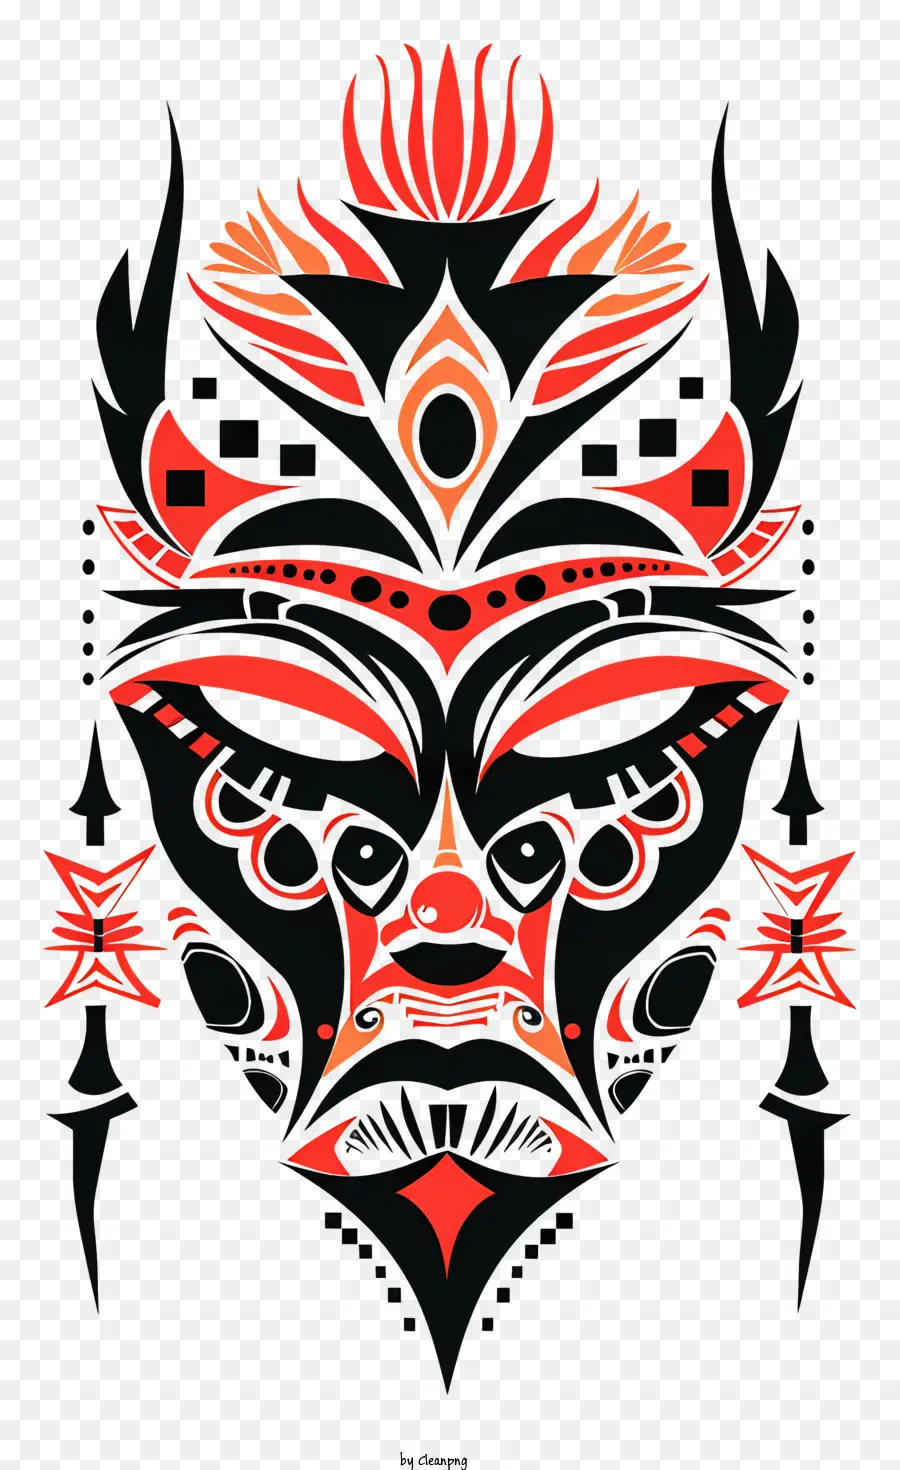 tribal tattoo tribal mask red and black design ornate patterns intricate swirls